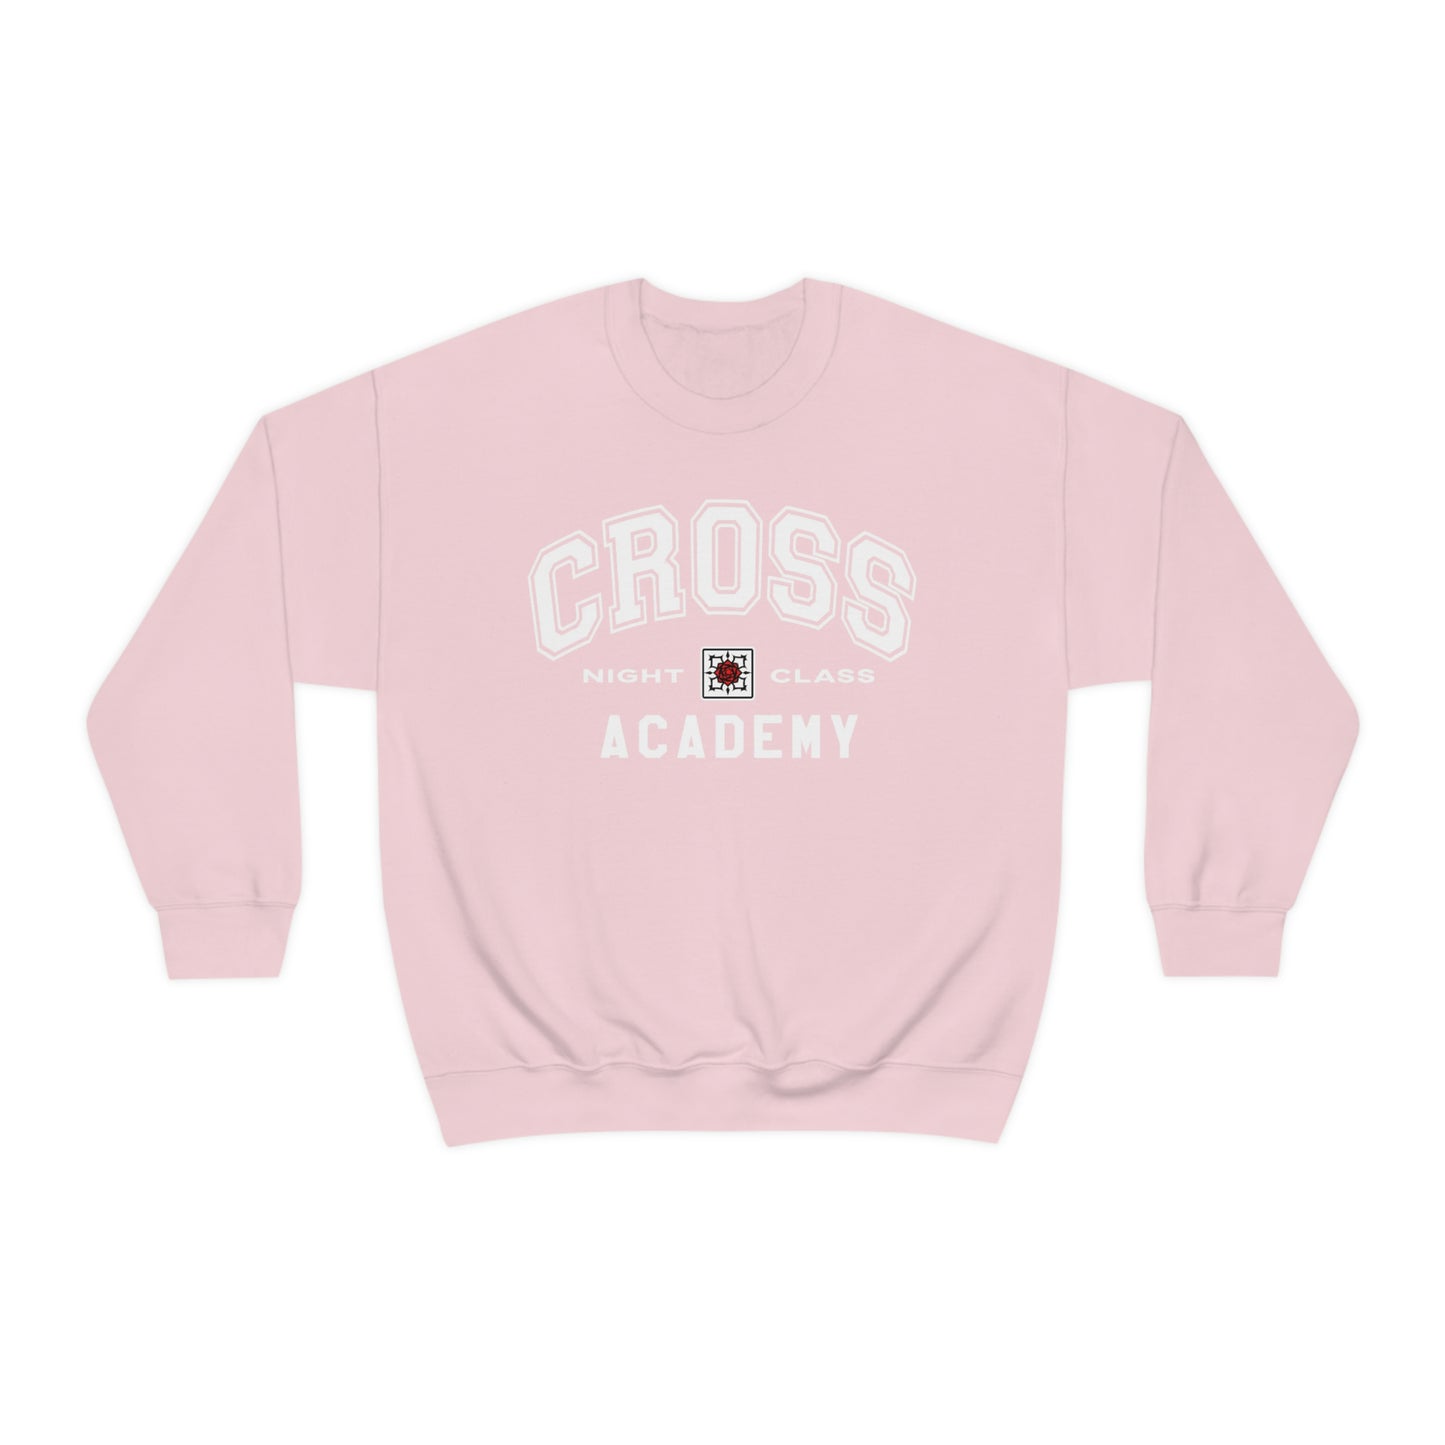 Cross Academy Night Class Sweatshirt Vampire Zero crew neck sweater jumper